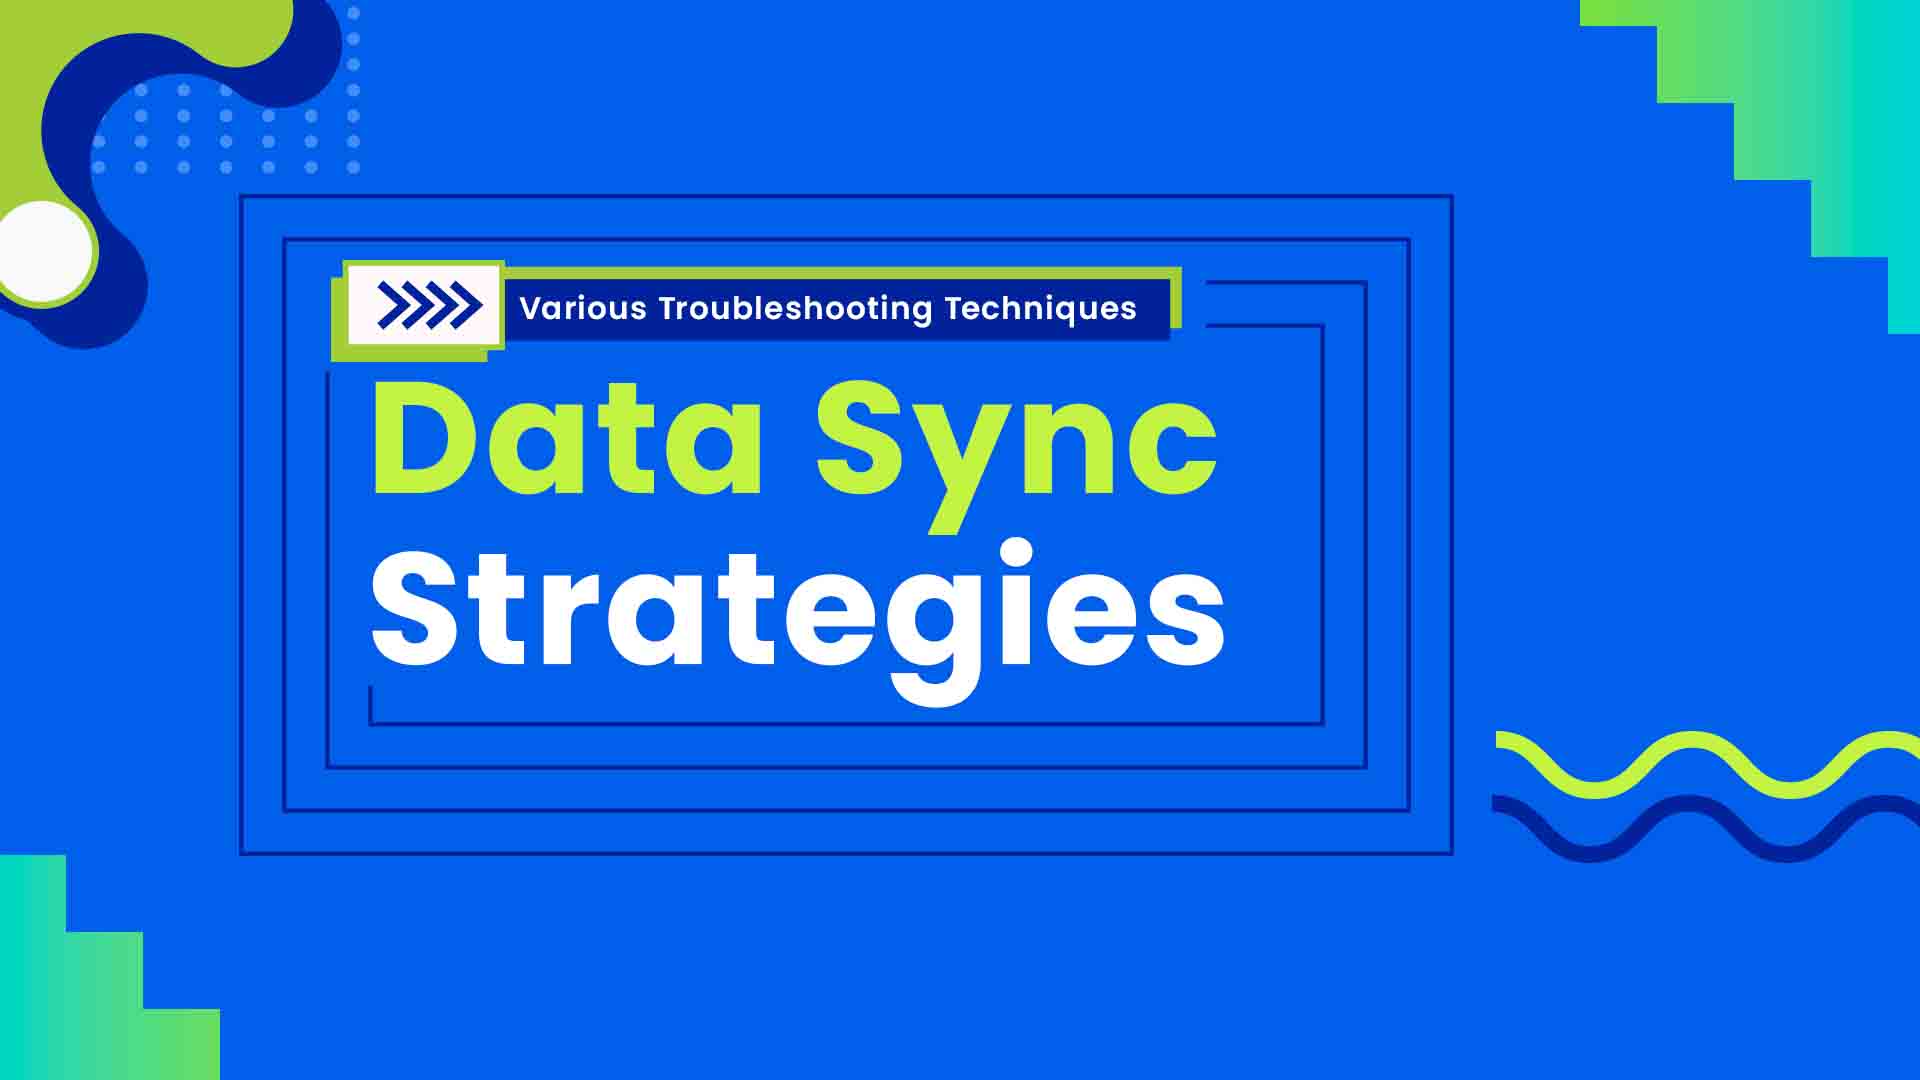 1. Data Sync Strategies